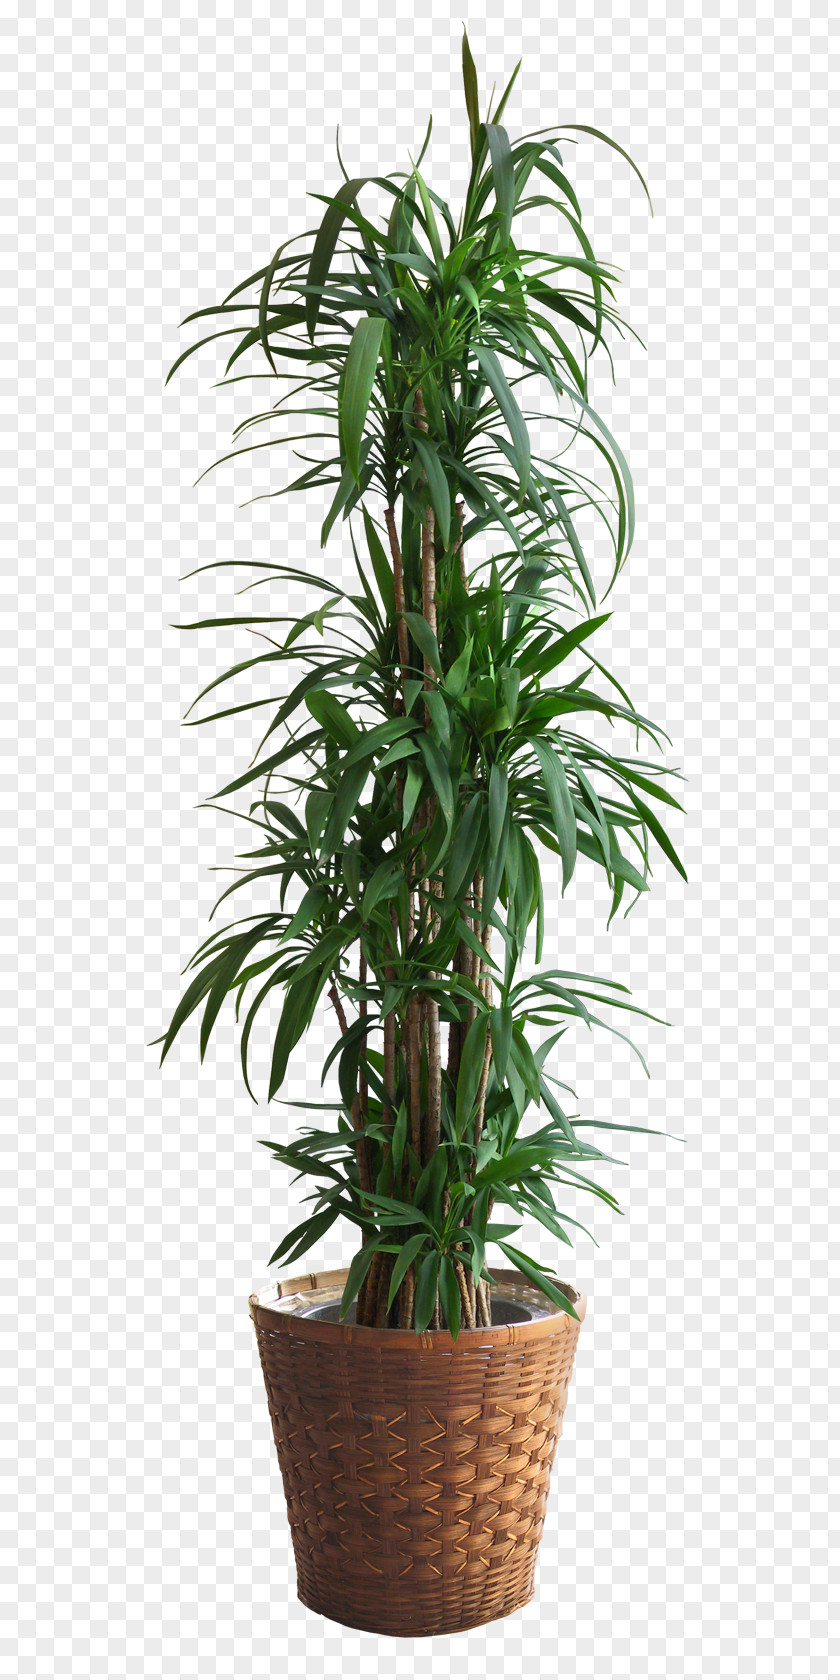 Potted Plant Populus Alba Nigra Tree PNG